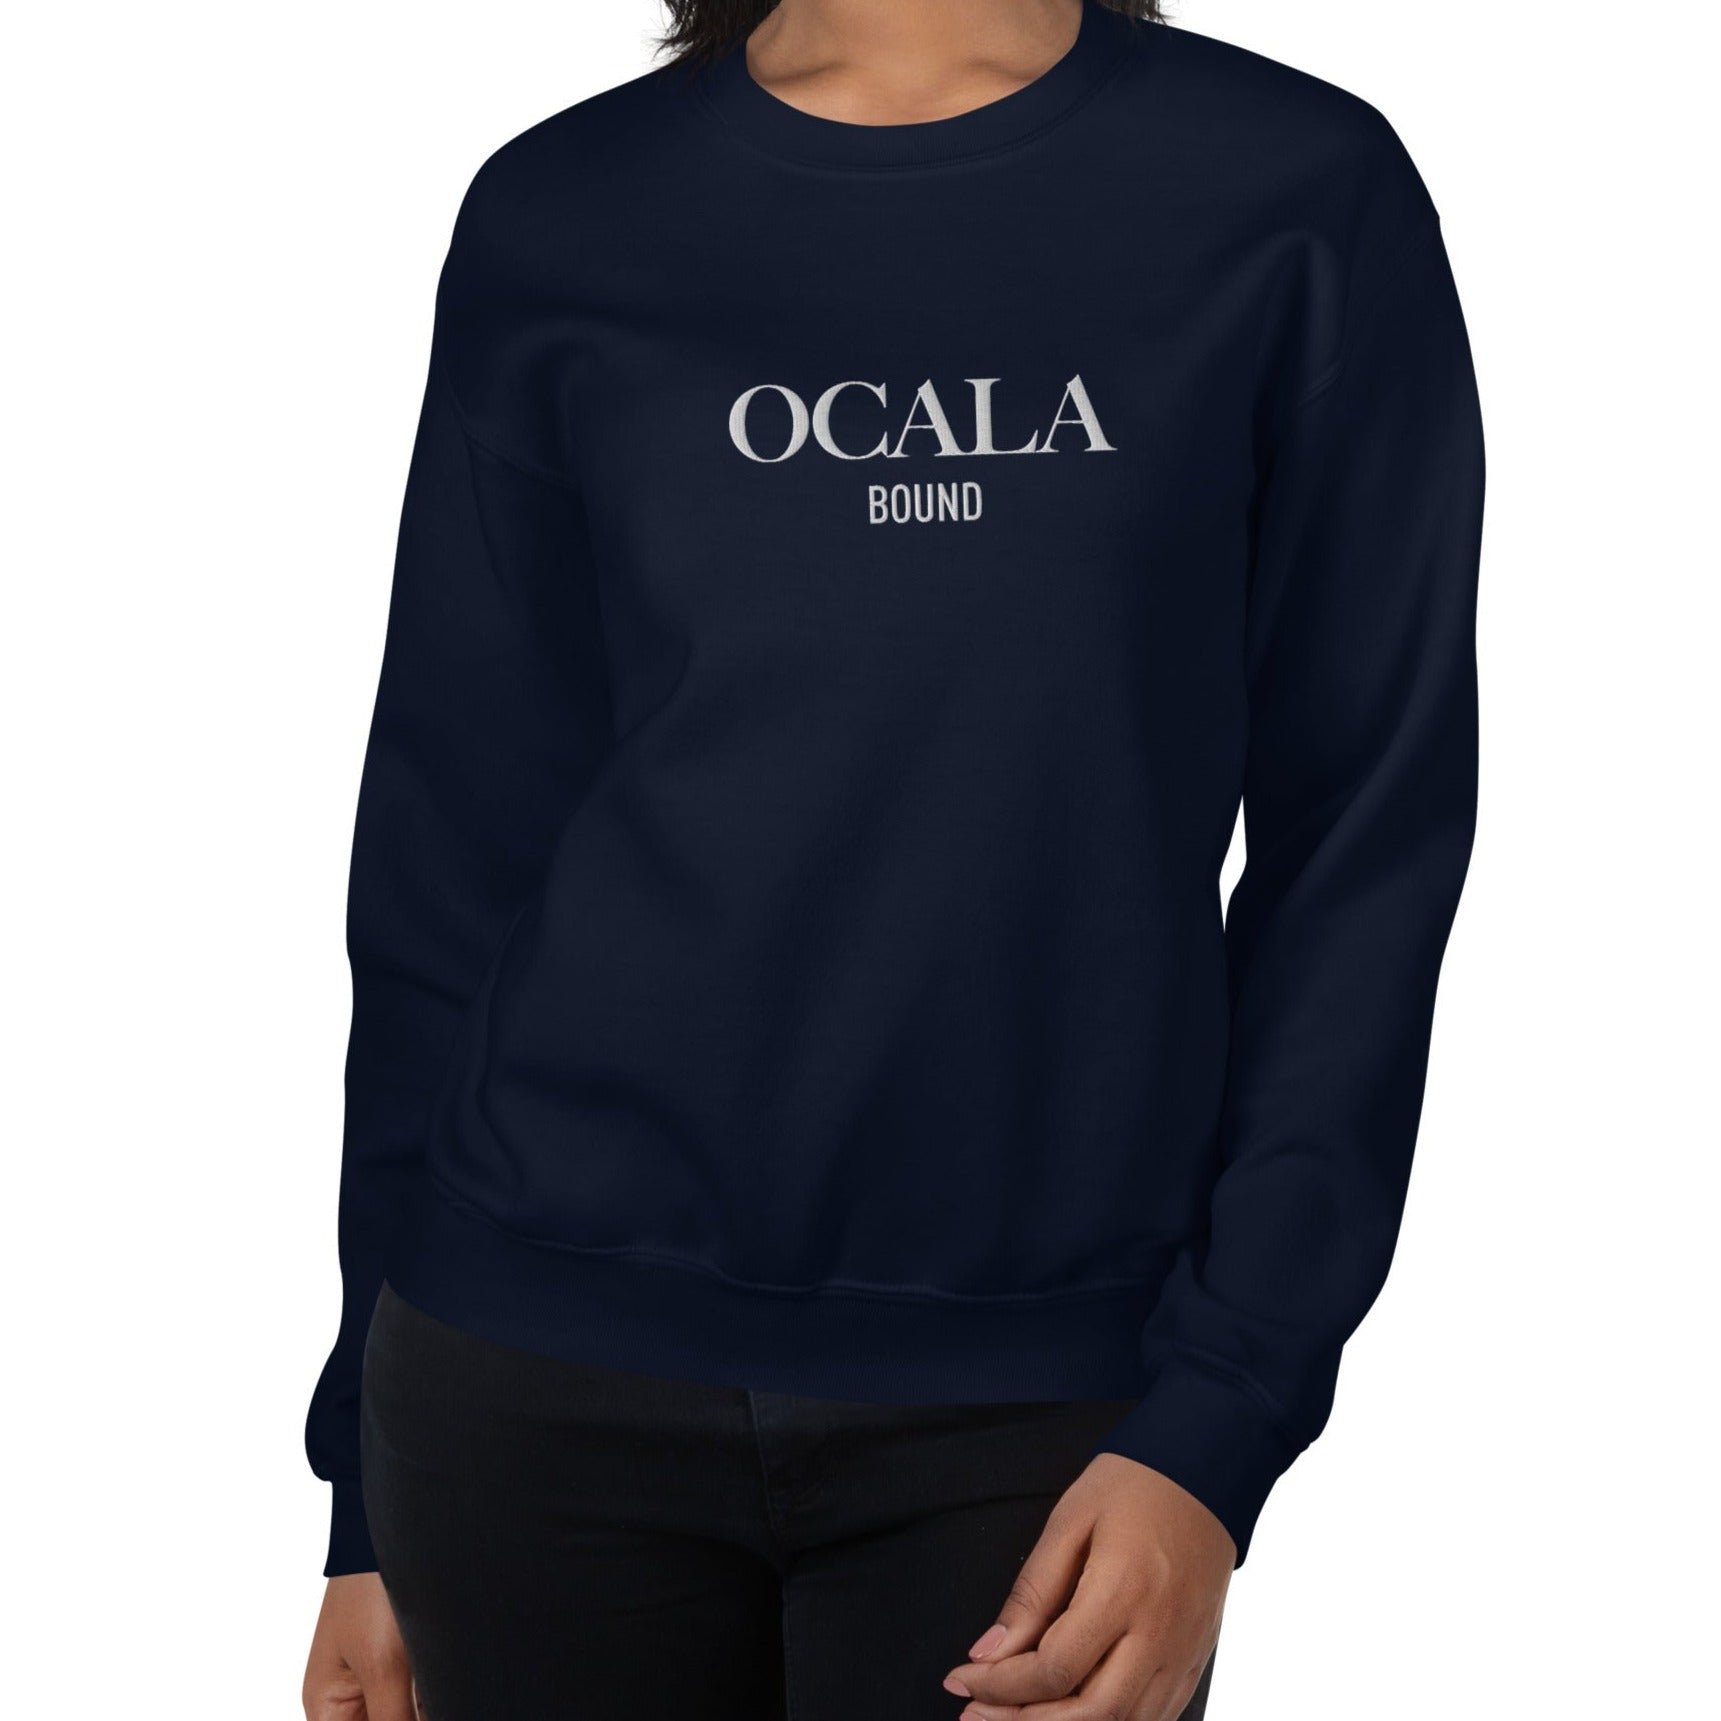 Ocala Bound Pullover in Navy by EQUESTRIANISTA Brand.